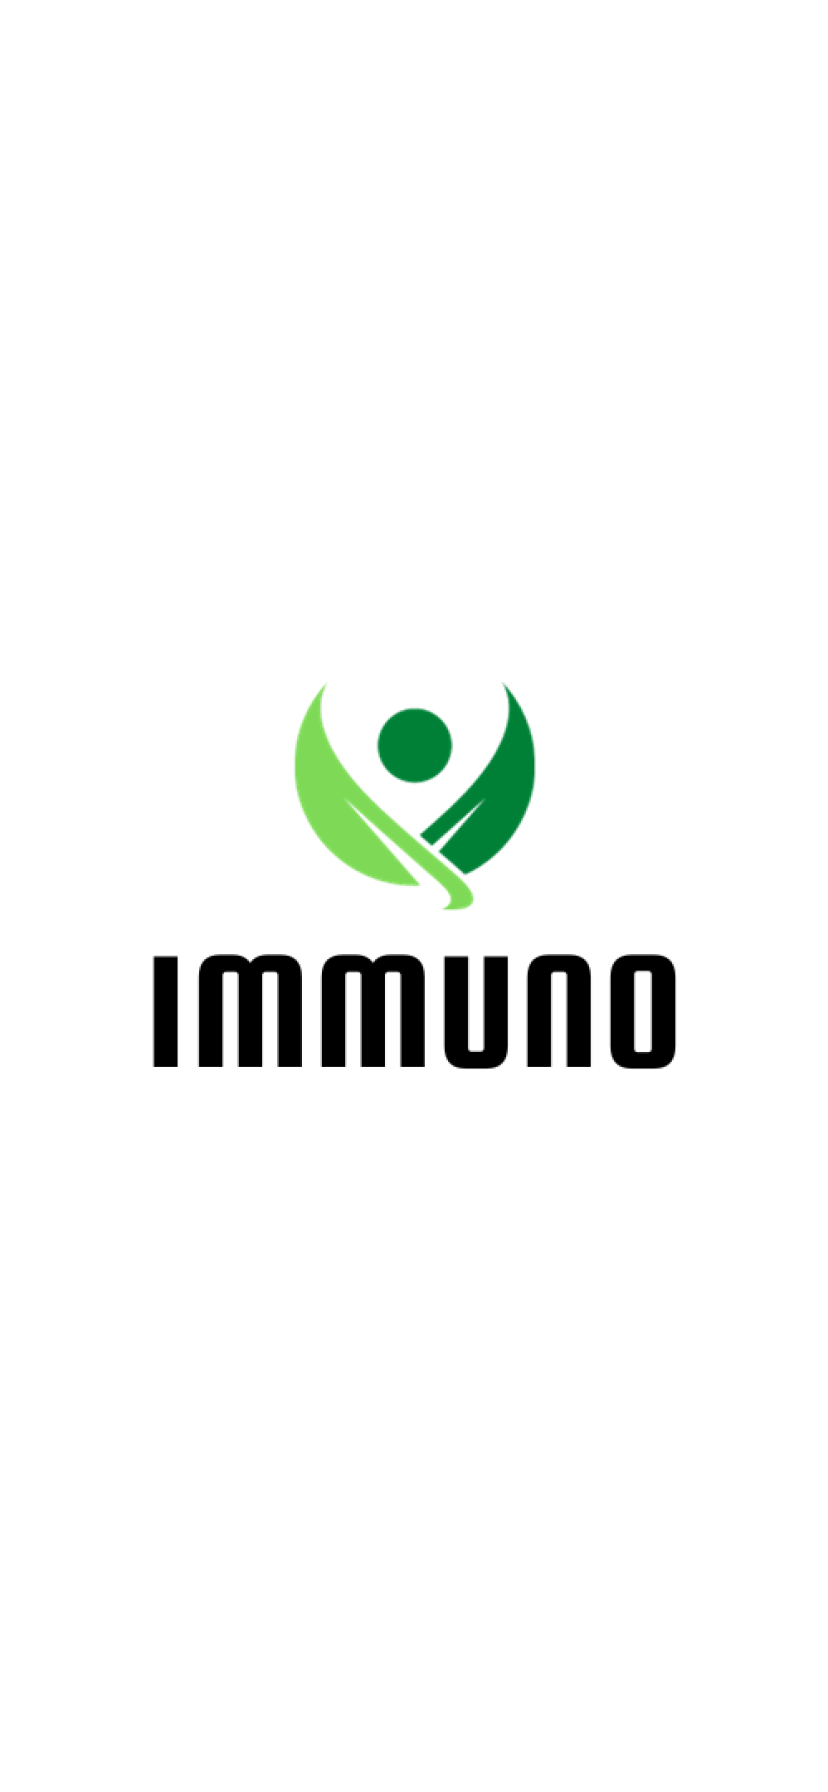 Immuno.net Domain Name For Sale